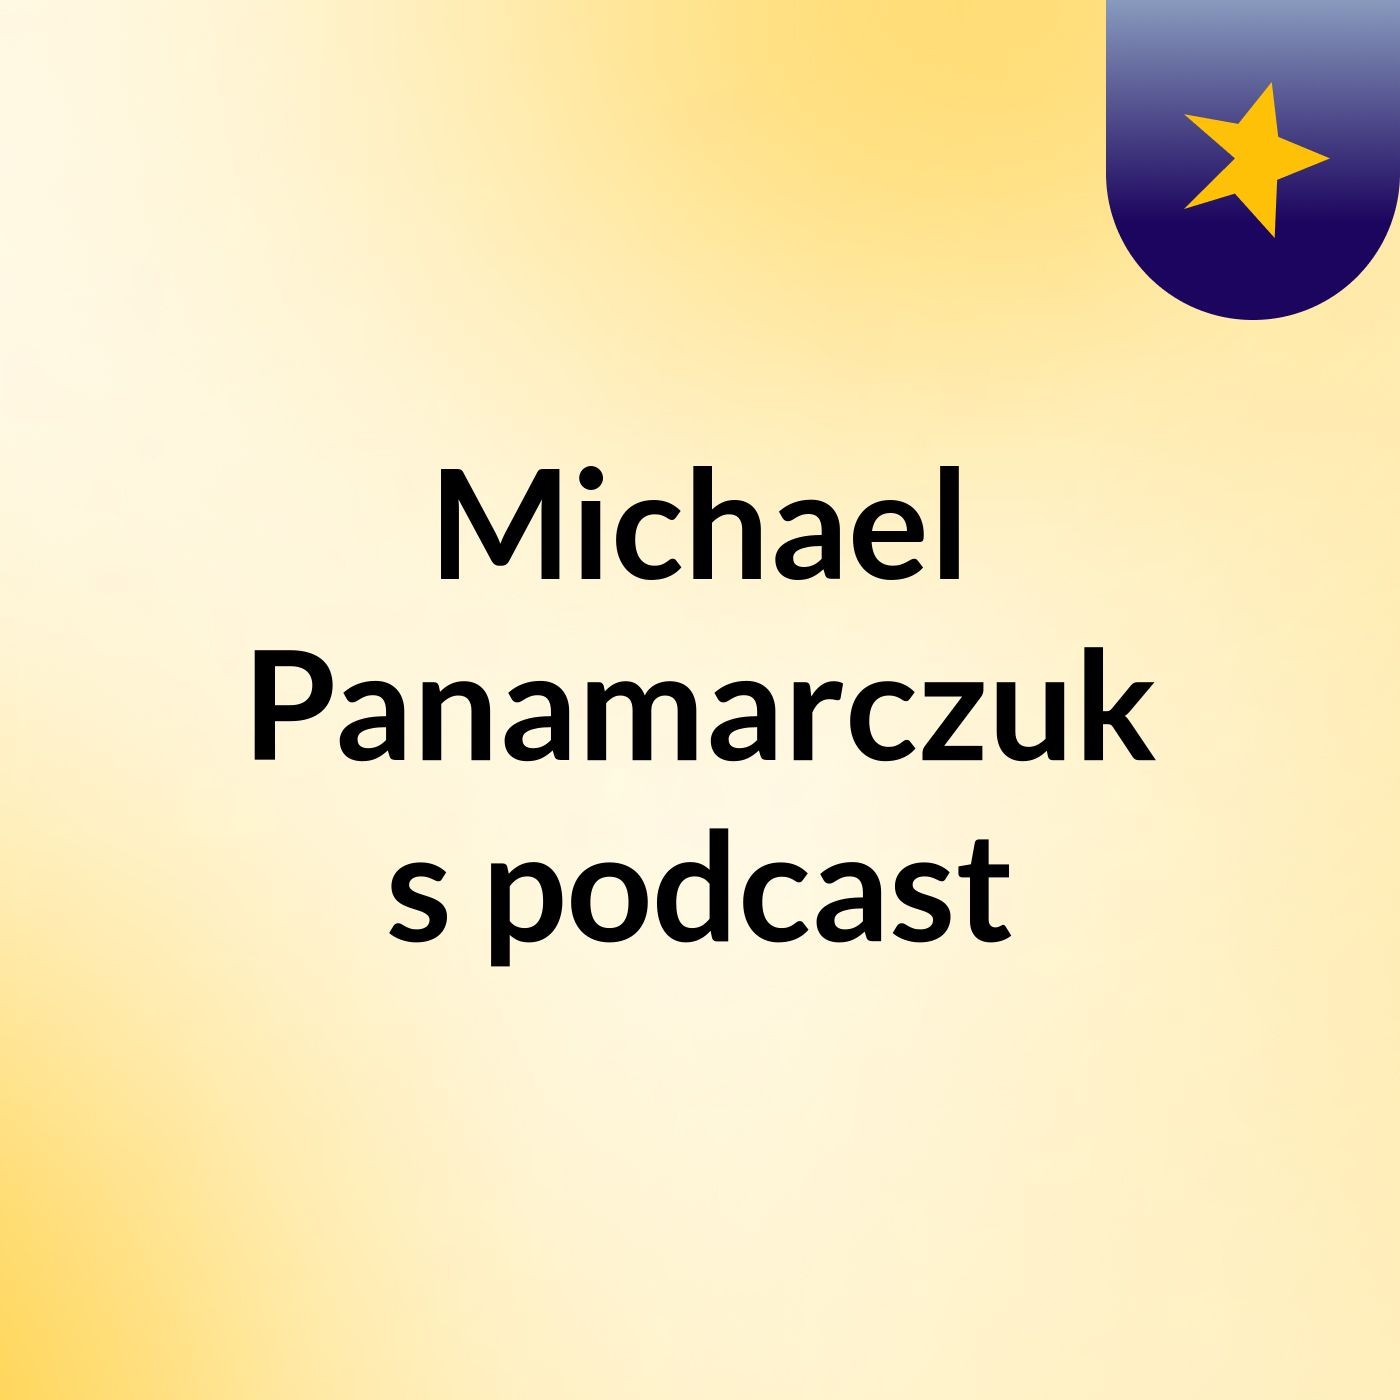 Episode 17 - Michael Panamarczuk's podcast